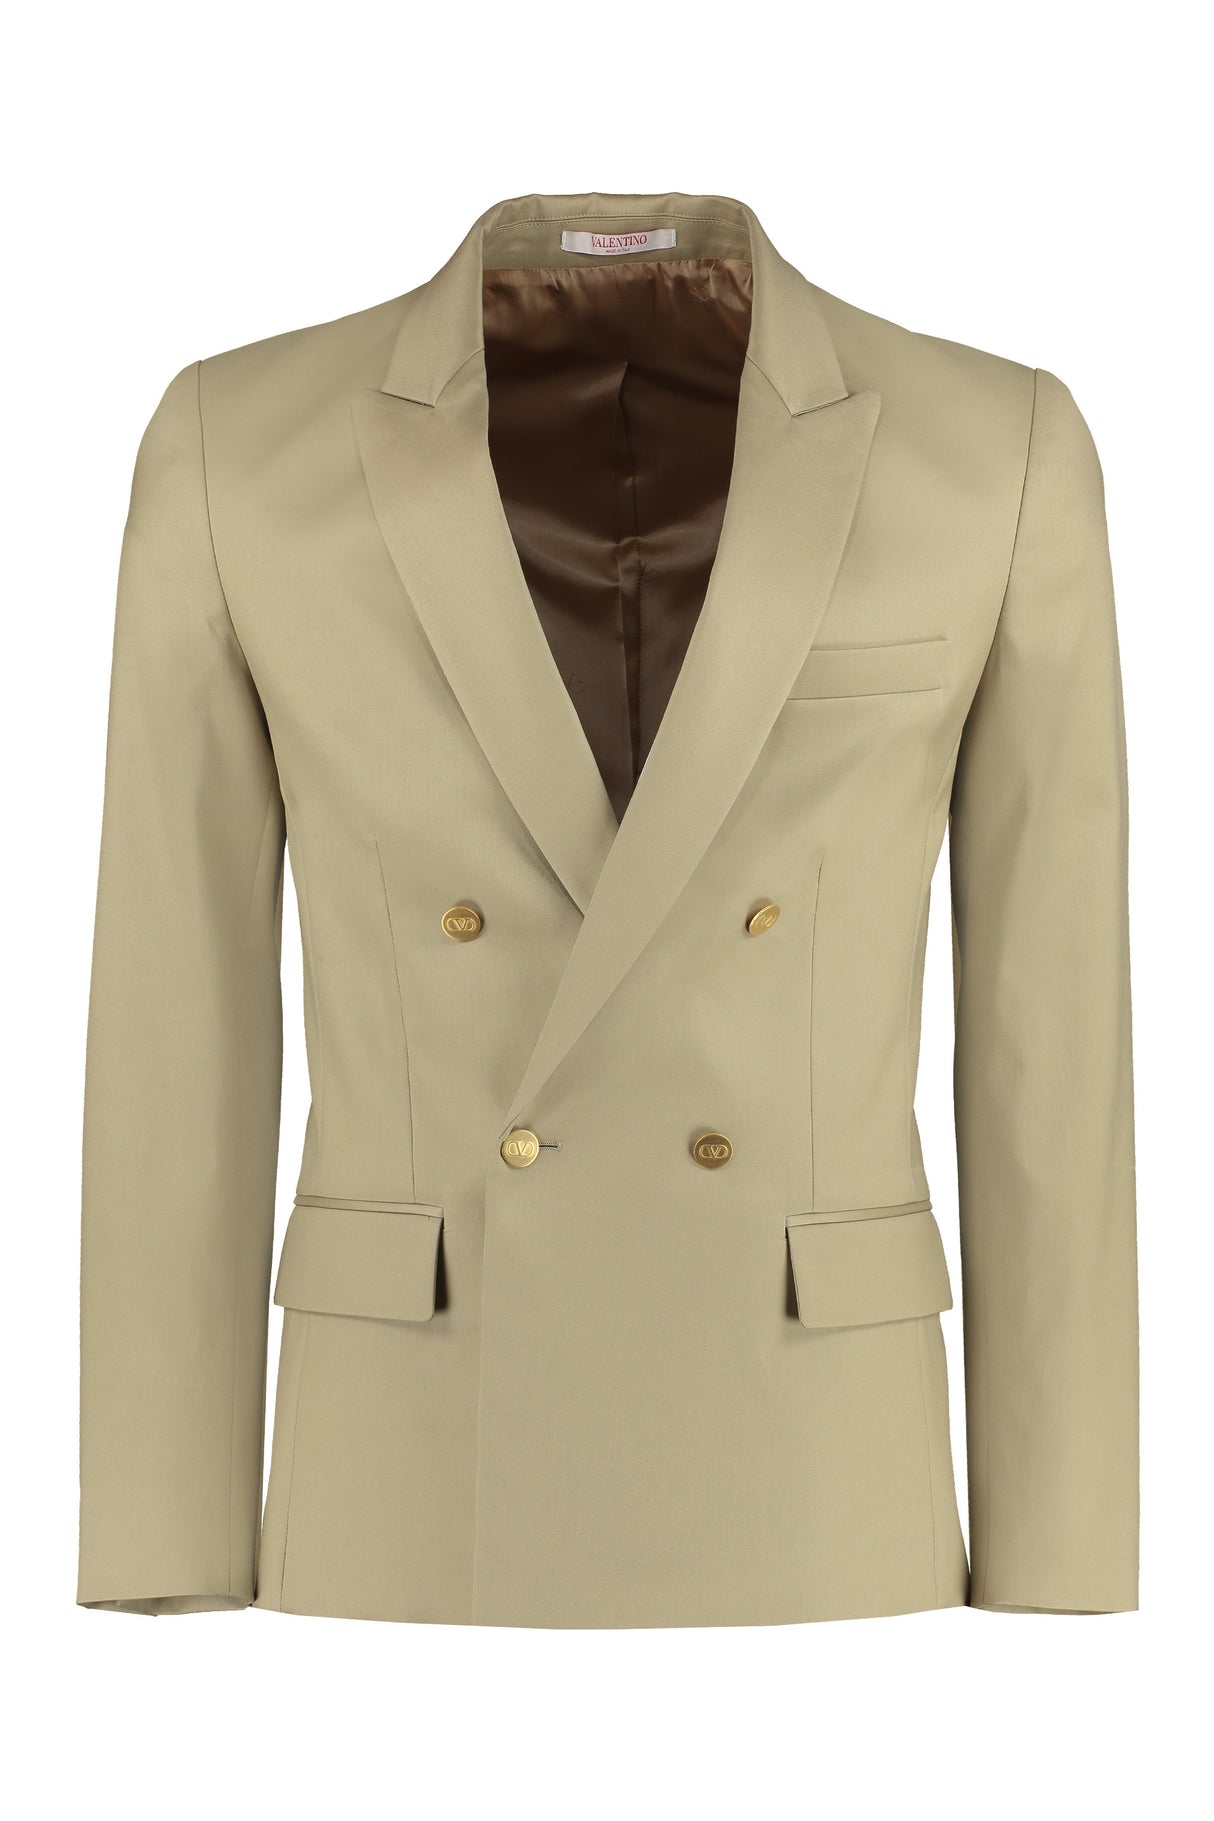 VALENTINO GARAVANI Sand-Colored Double-Breasted Cotton Jacket for Men